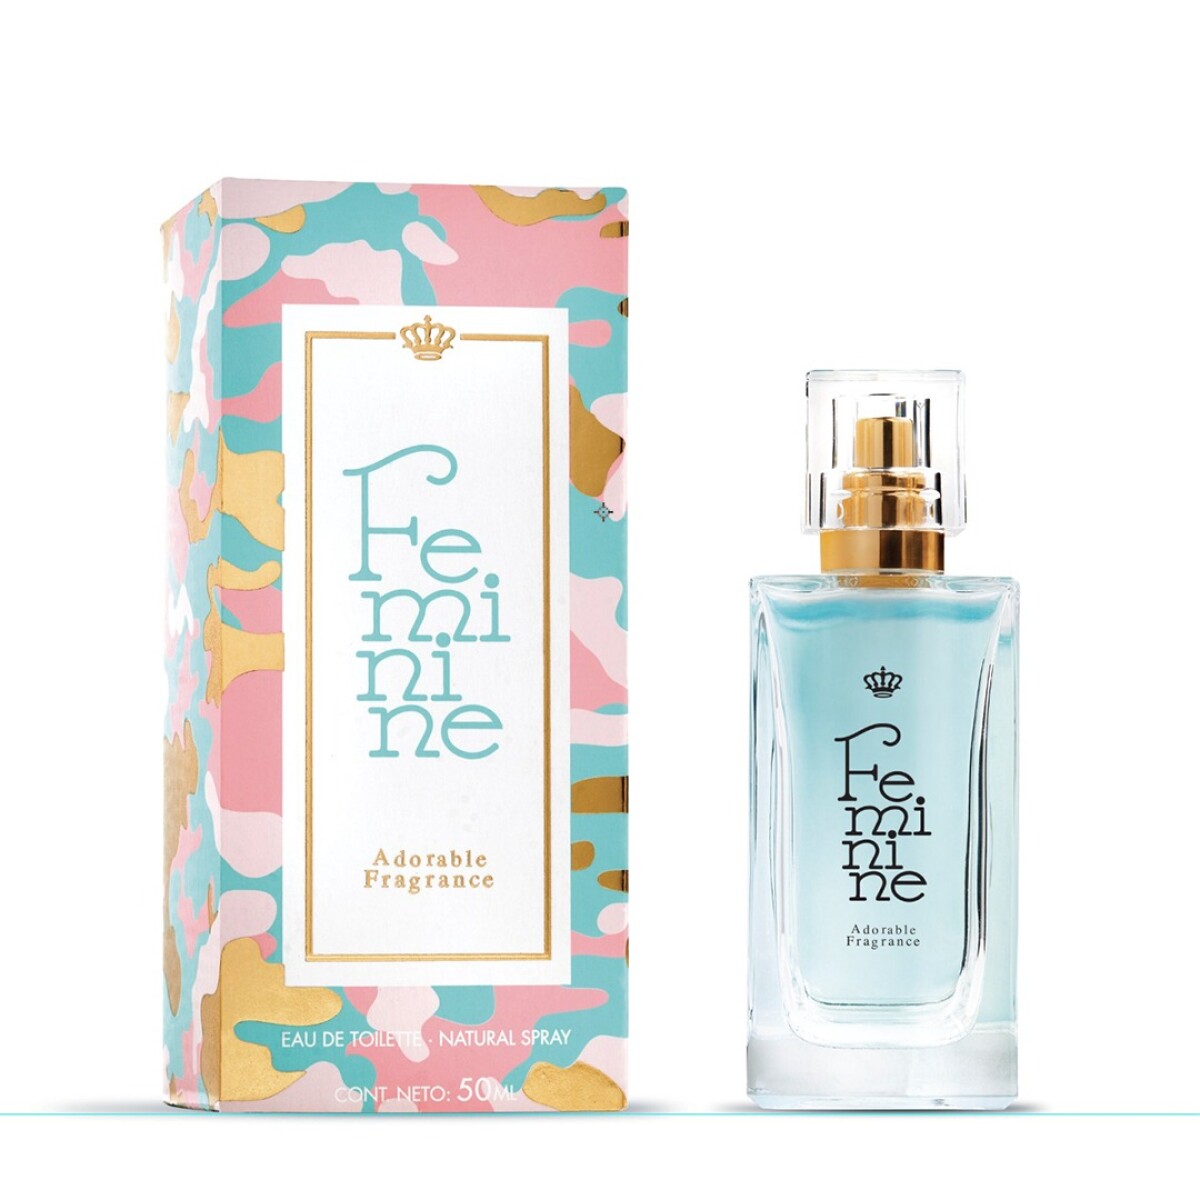 Perfume Feminine Adorable Fragance Edt 50ML - 001 